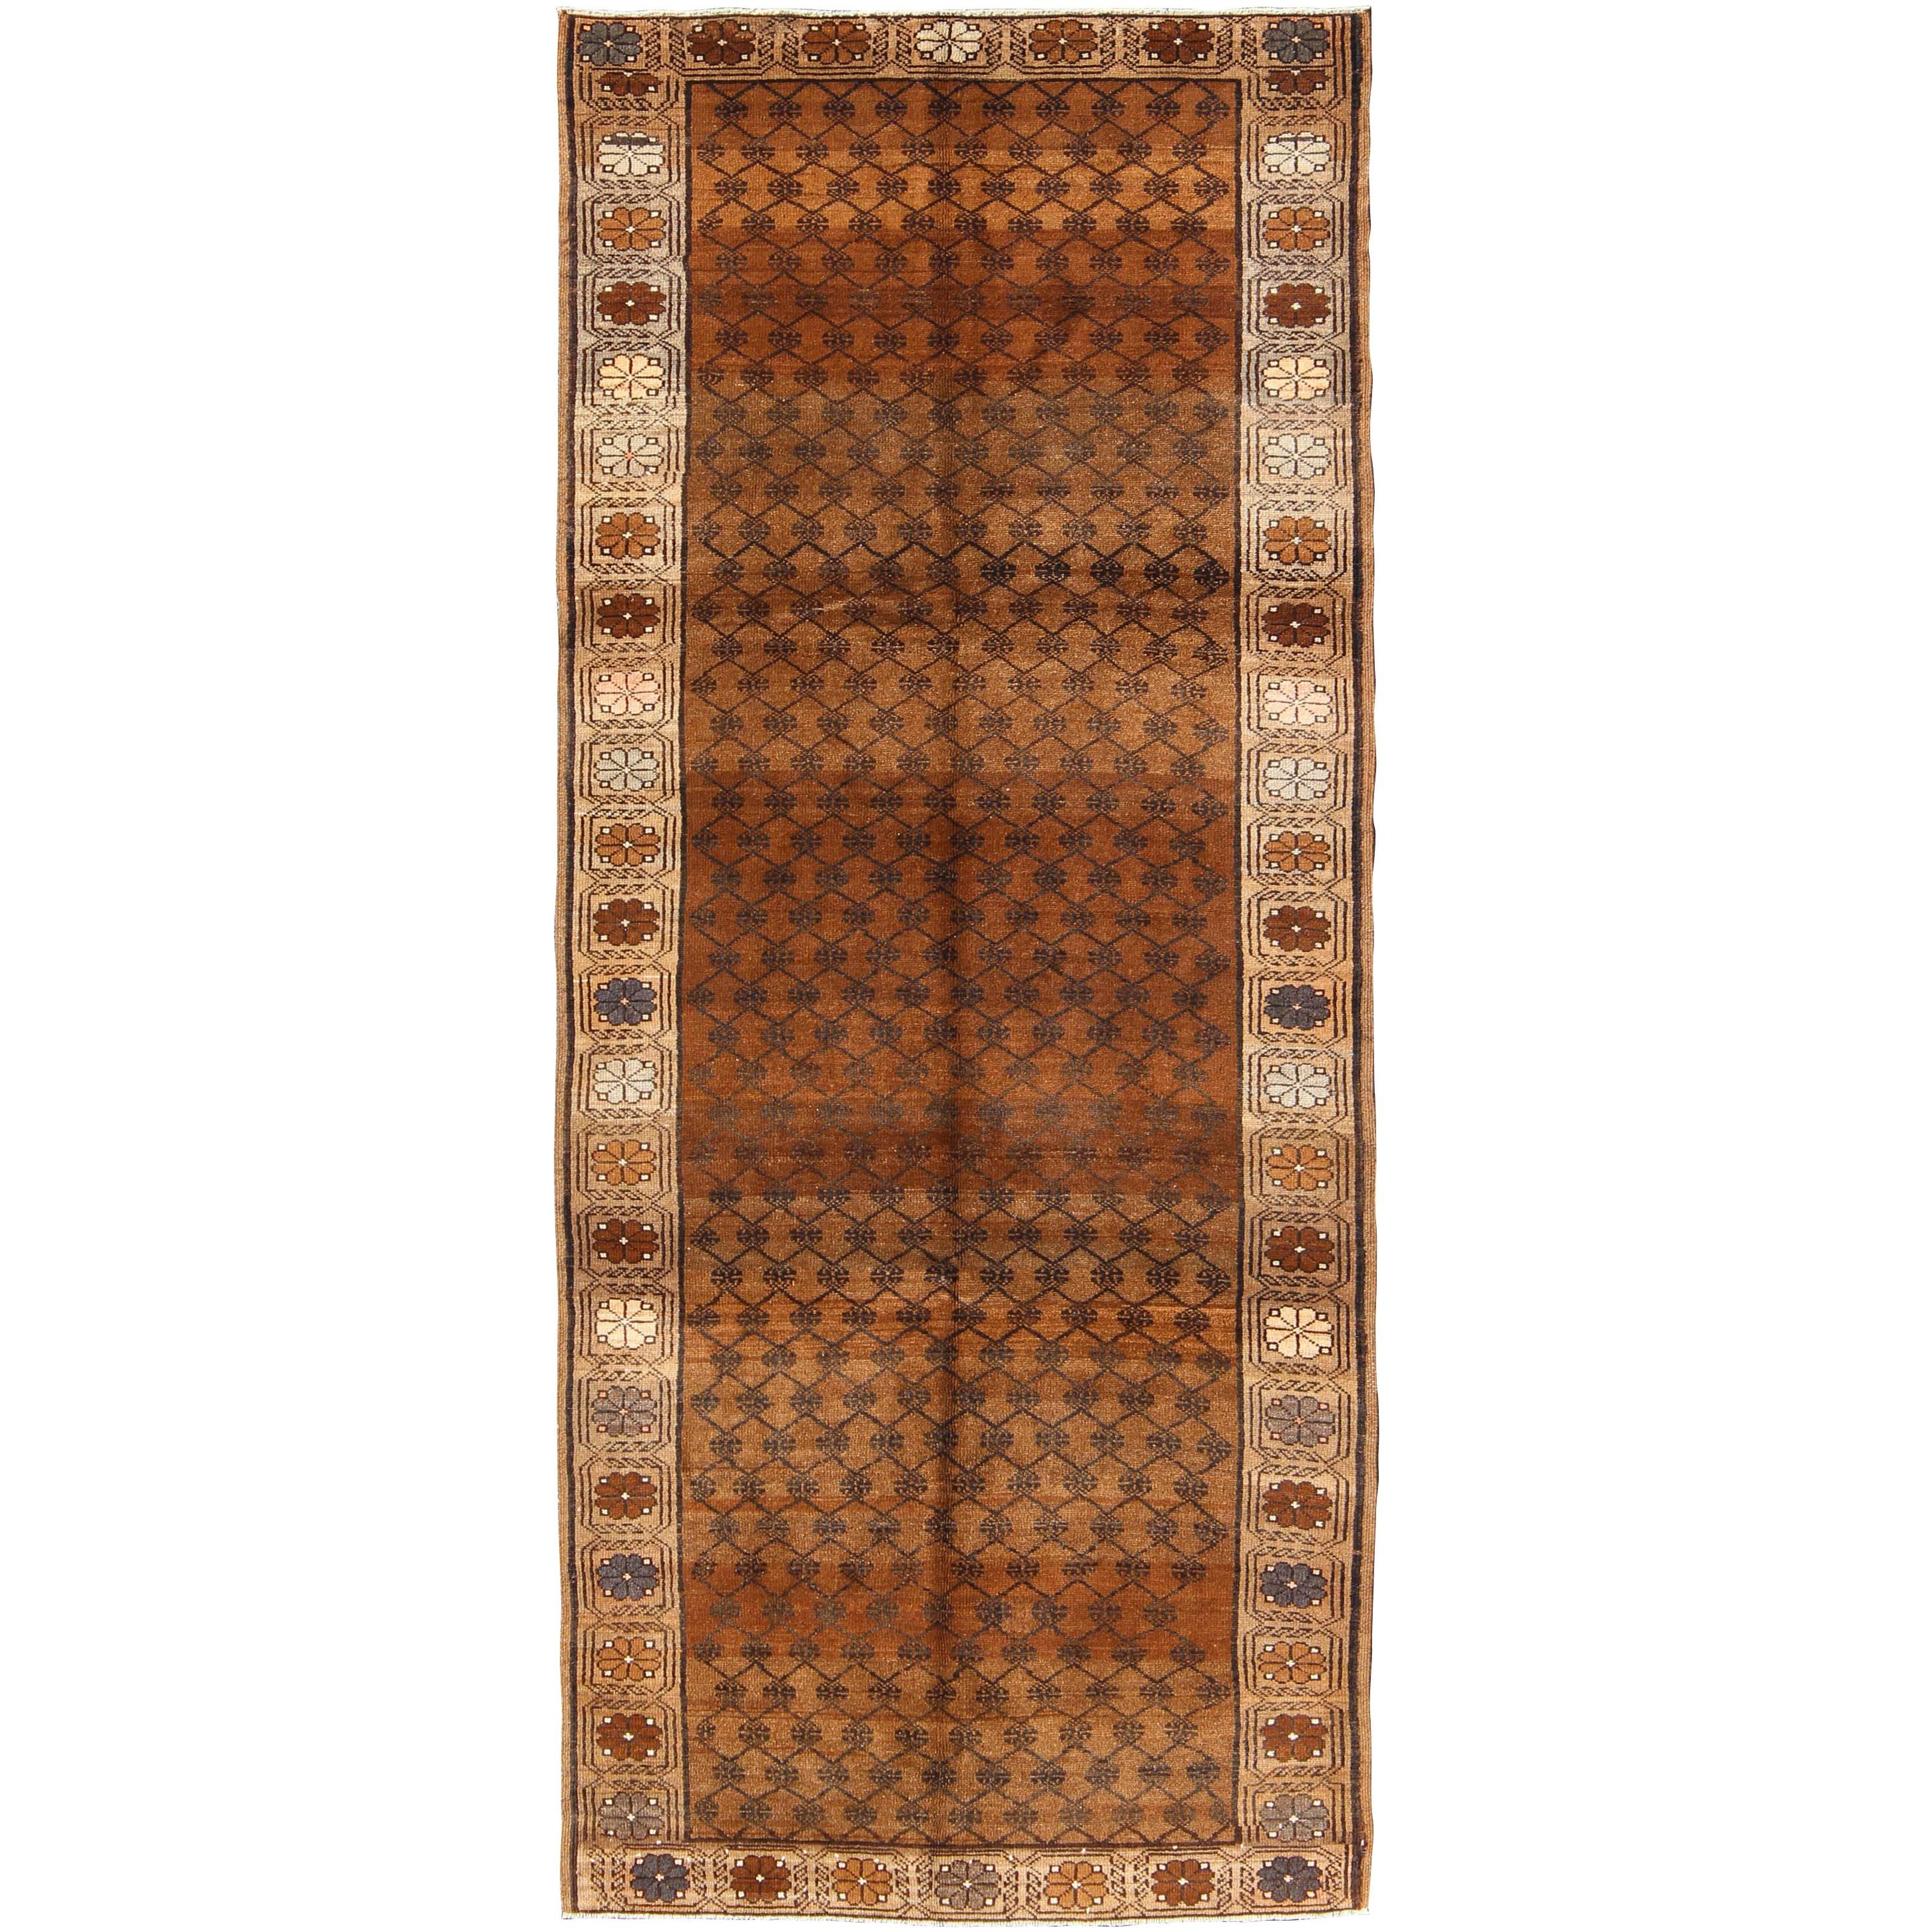 Vintage Turkish Kars Tribal Rug with All-Over Modern Design in Brown Colors